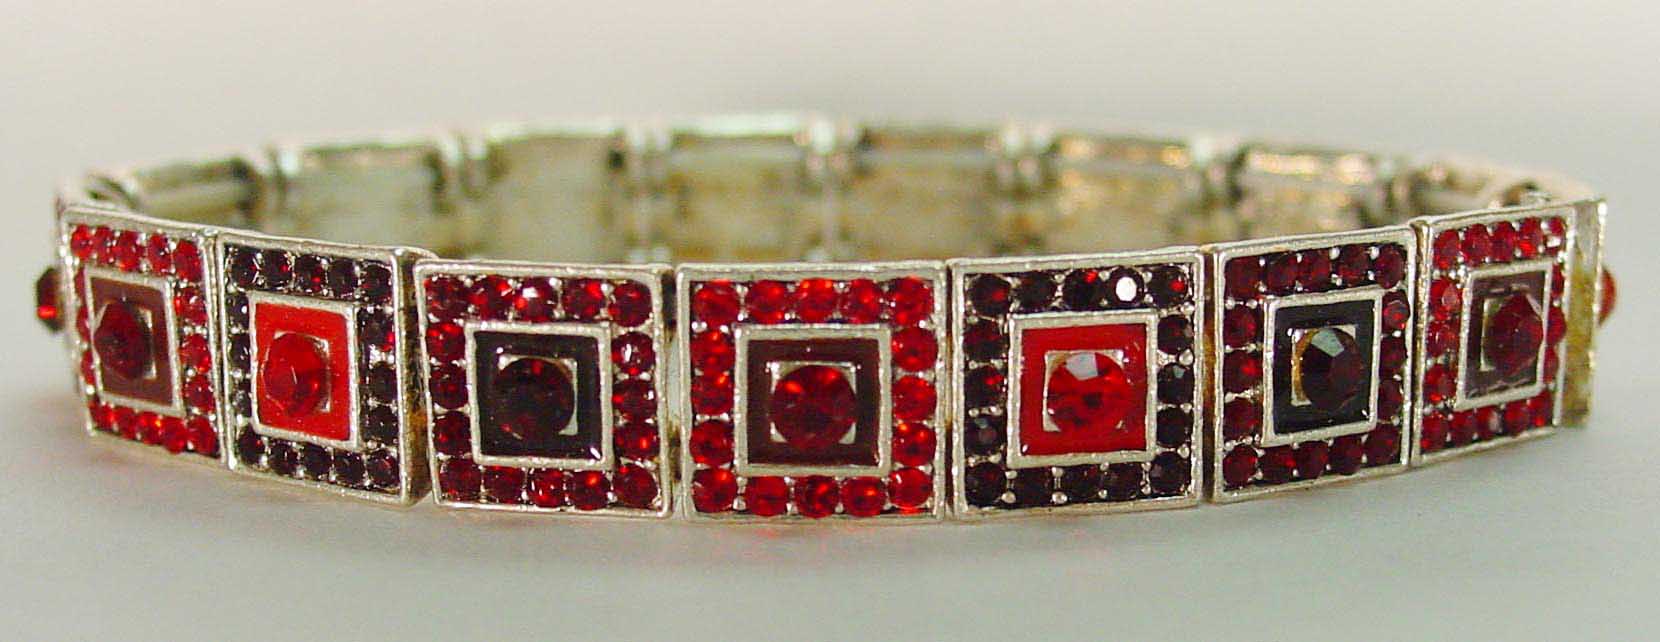 Red crystal rhodium plated bracelet